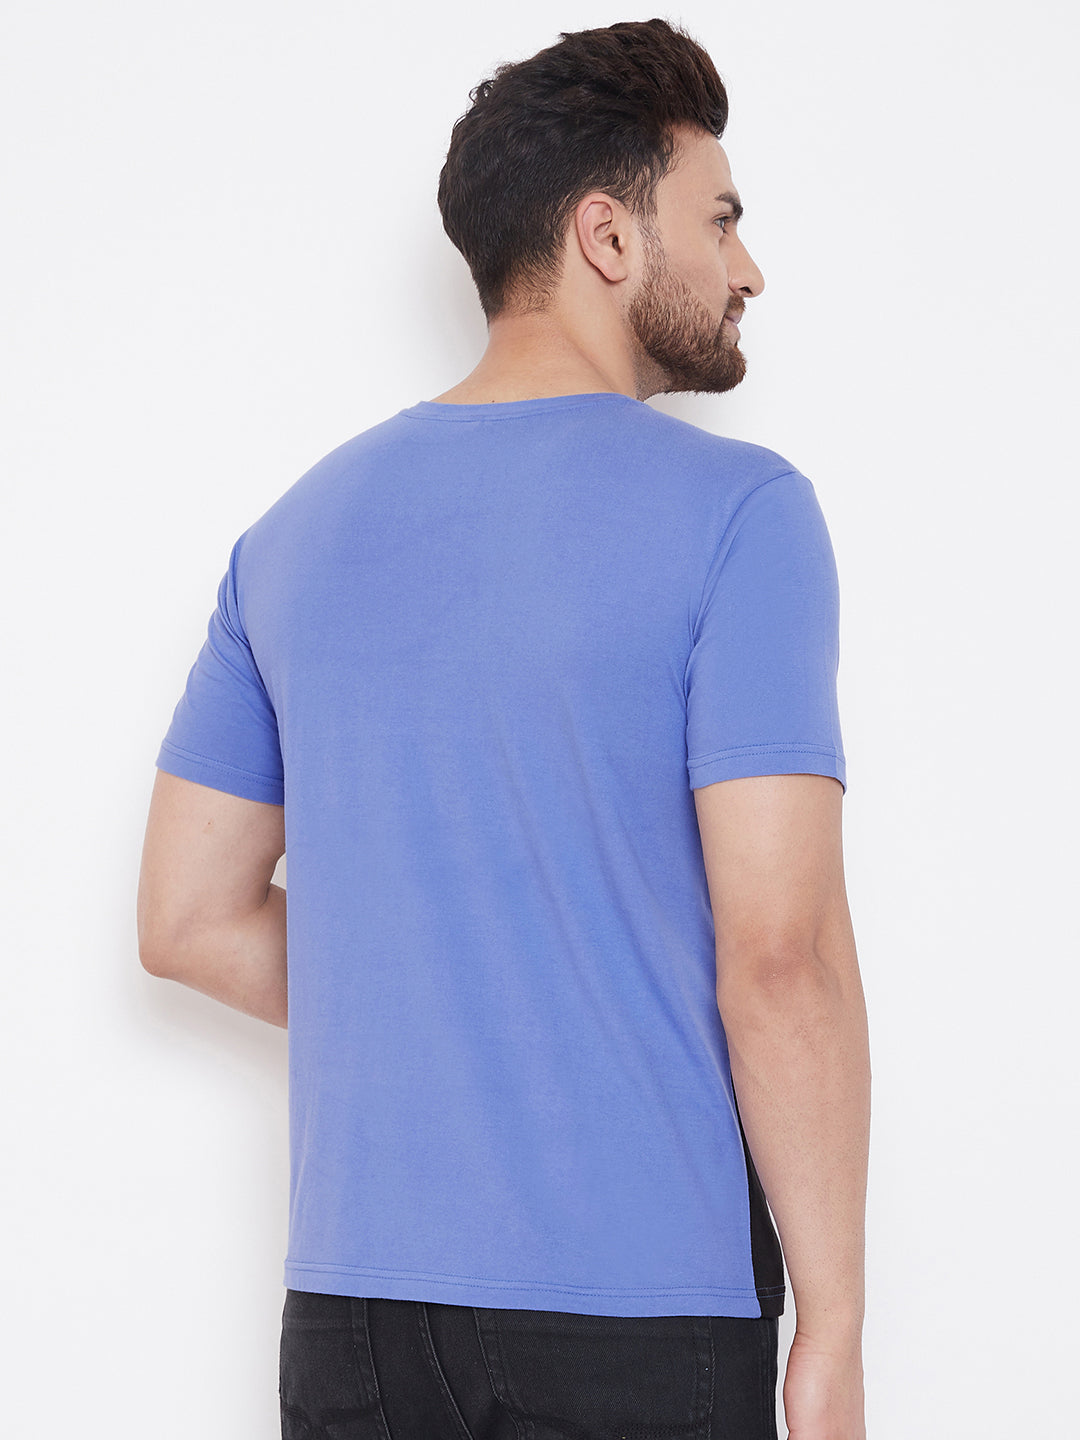 Blue/White/Black Printed Men's Half Sleeves Round Neck T-Shirt